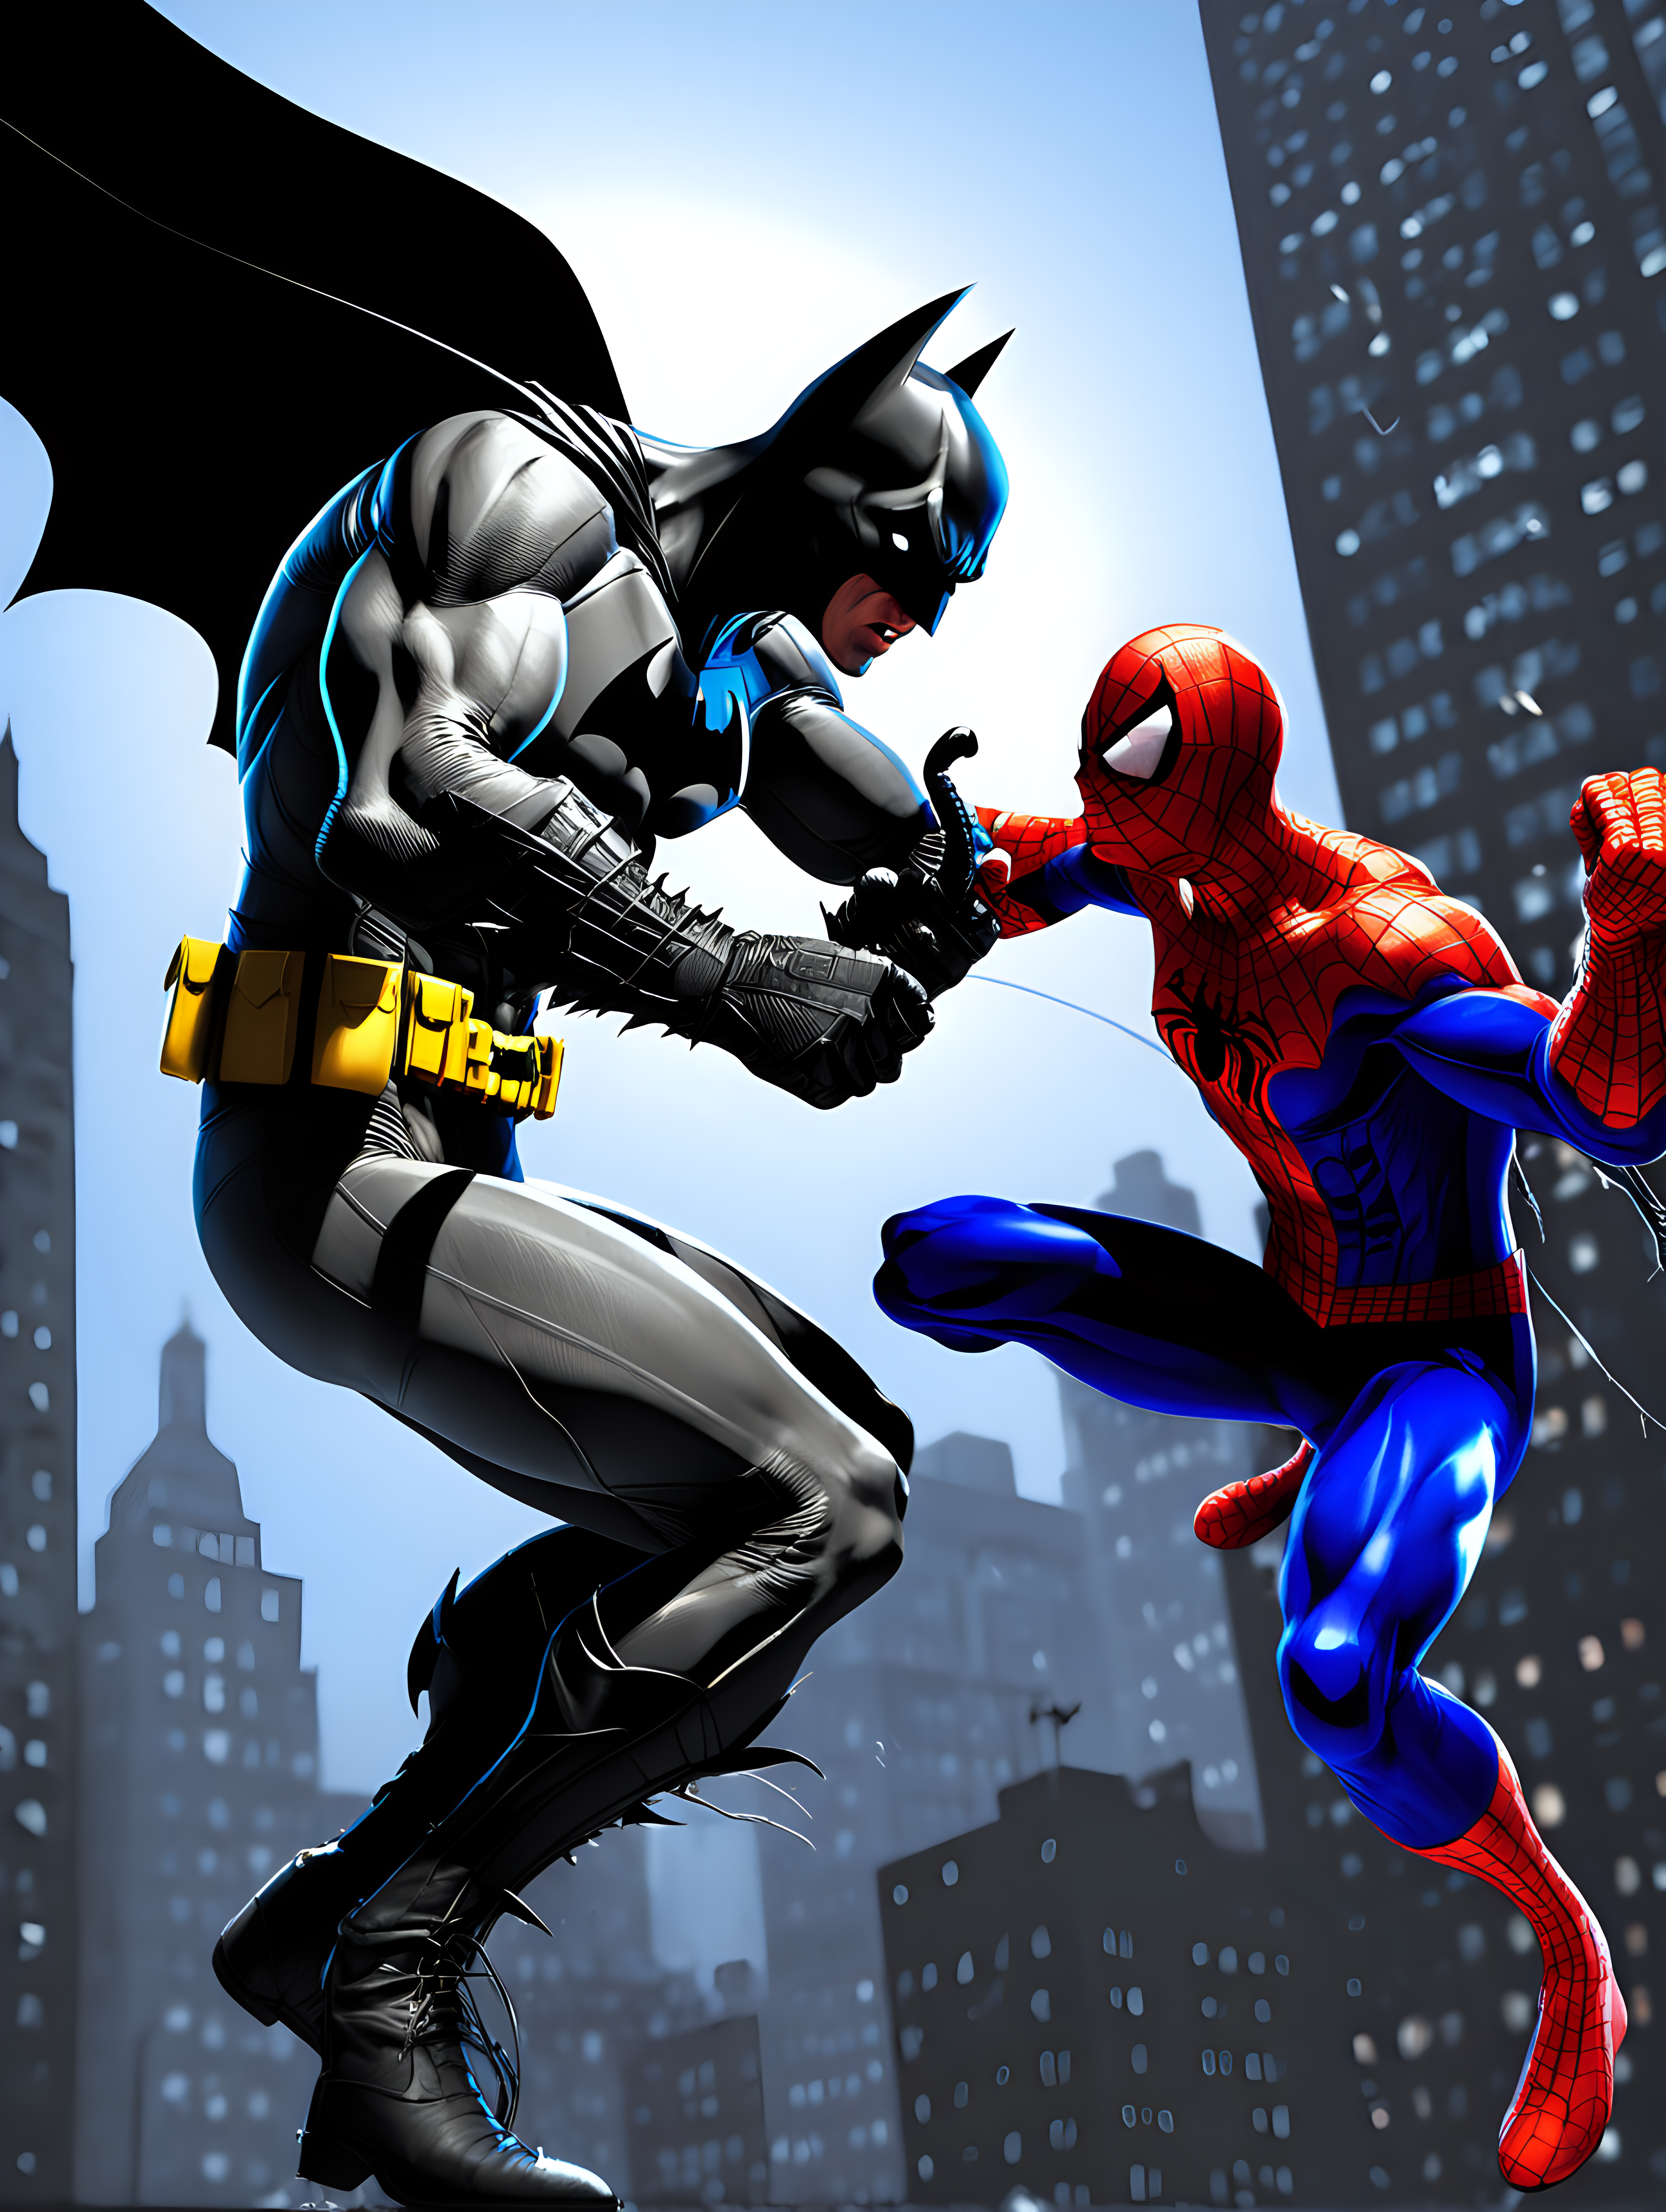 The Batman fighting the Spiderman